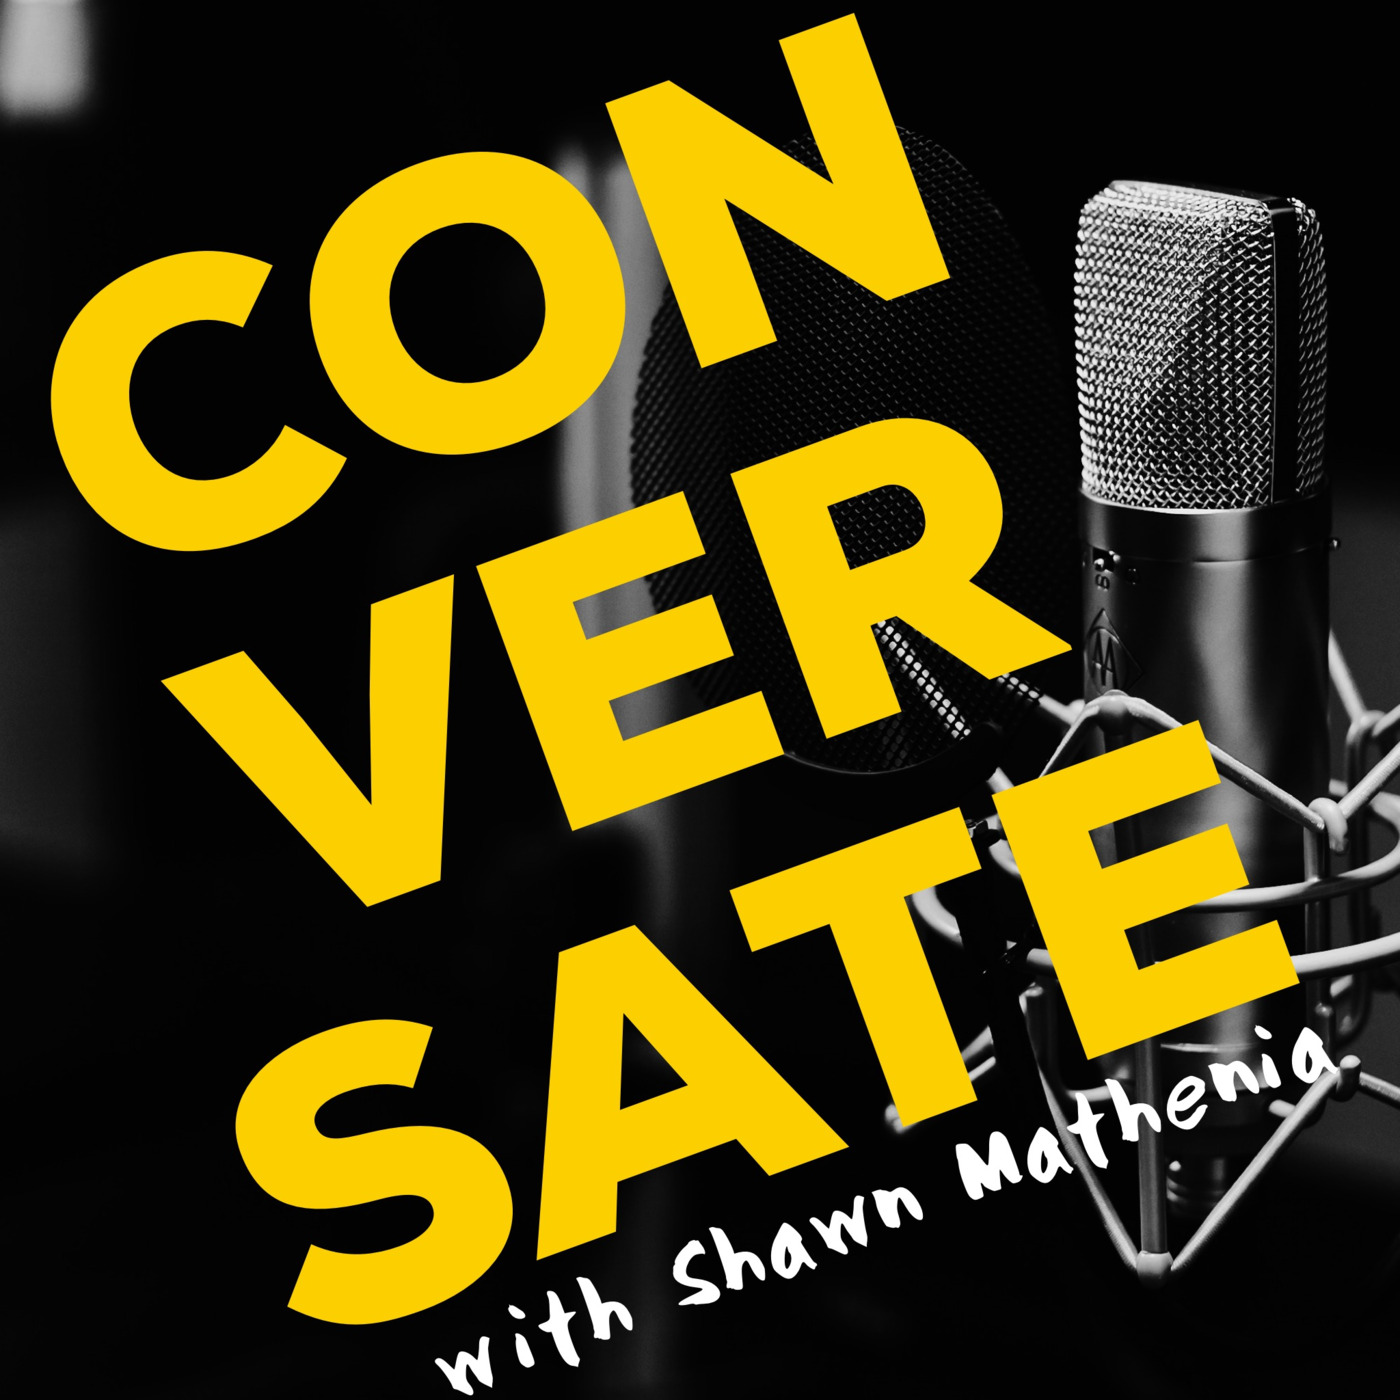 Conversate with Shawn Mathenia